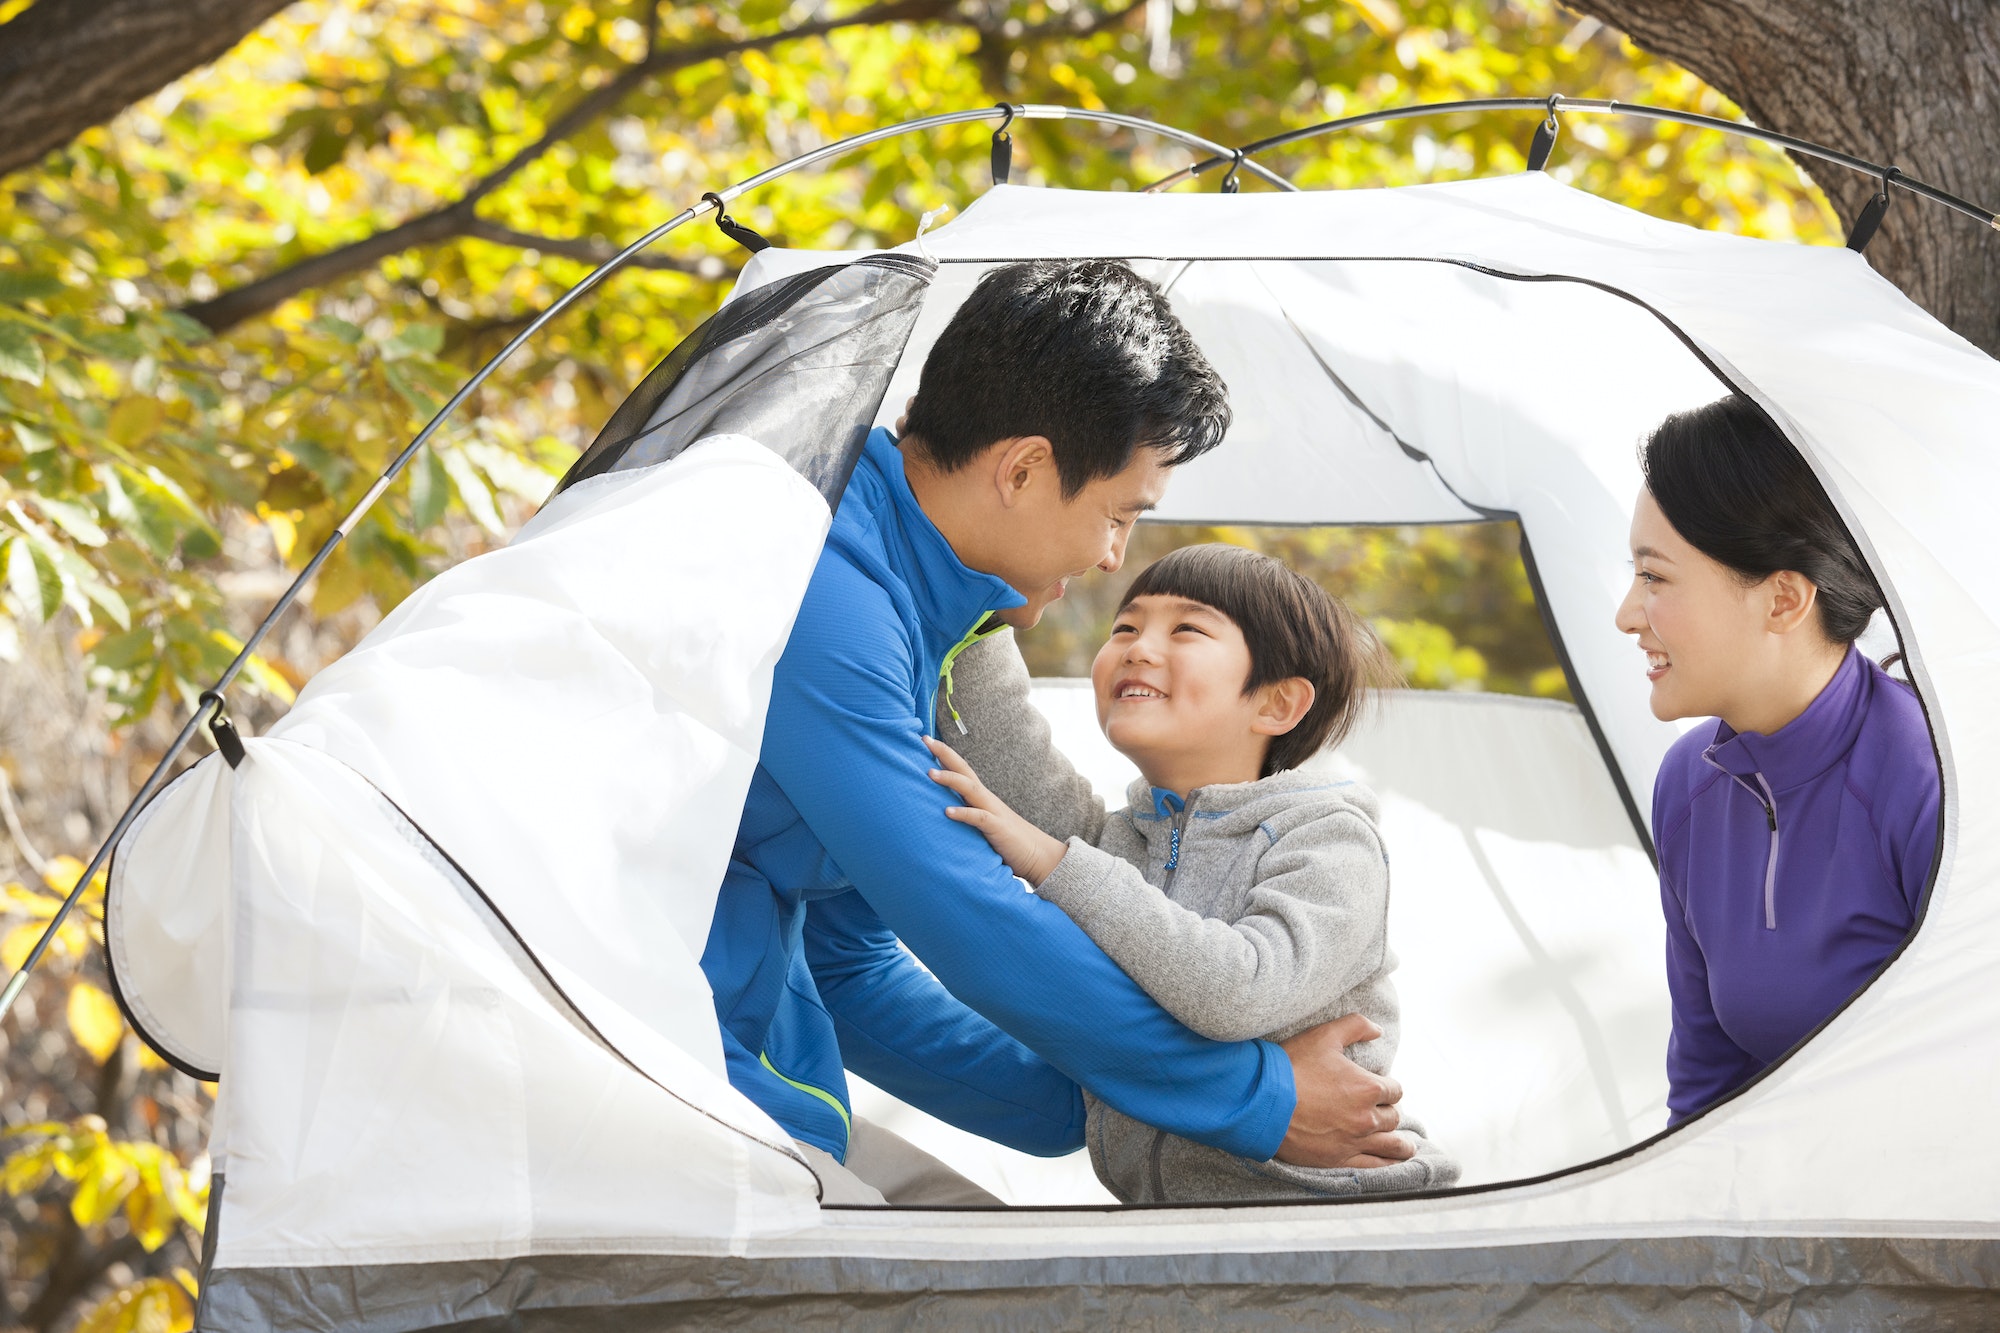 Cheerful family enjoying a camping trip